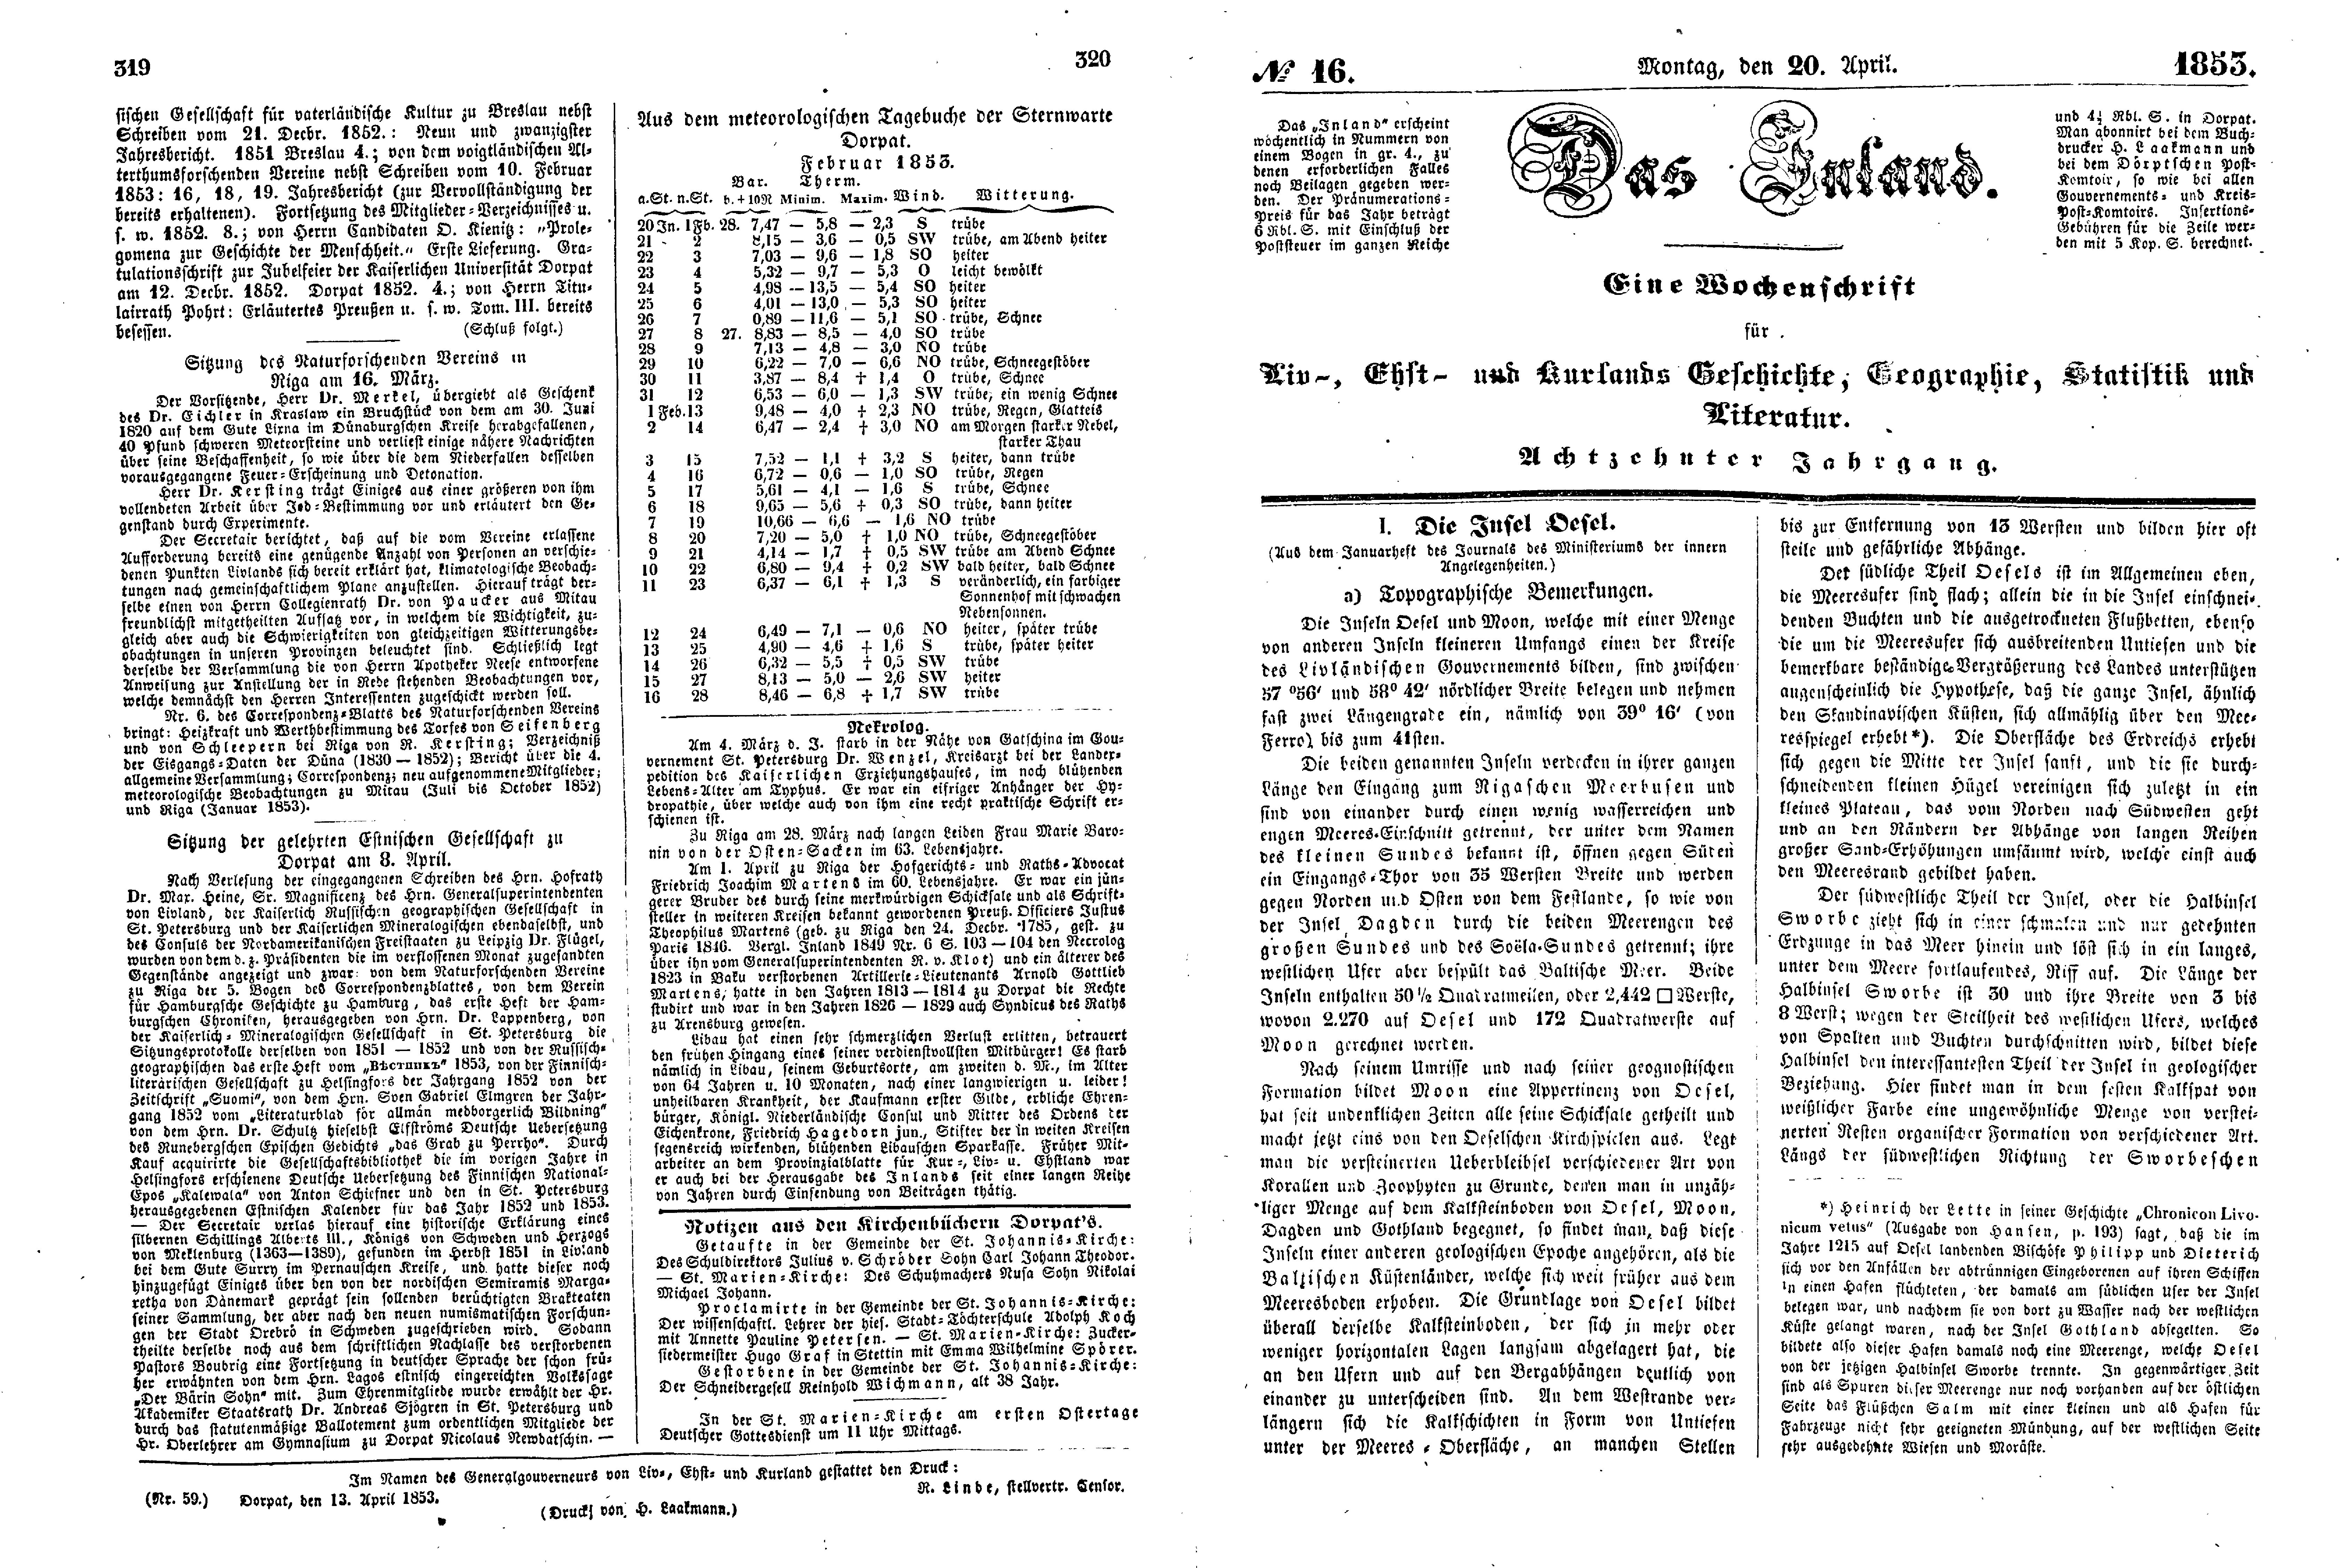 Das Inland [18] (1853) | 90. (319-322) Main body of text